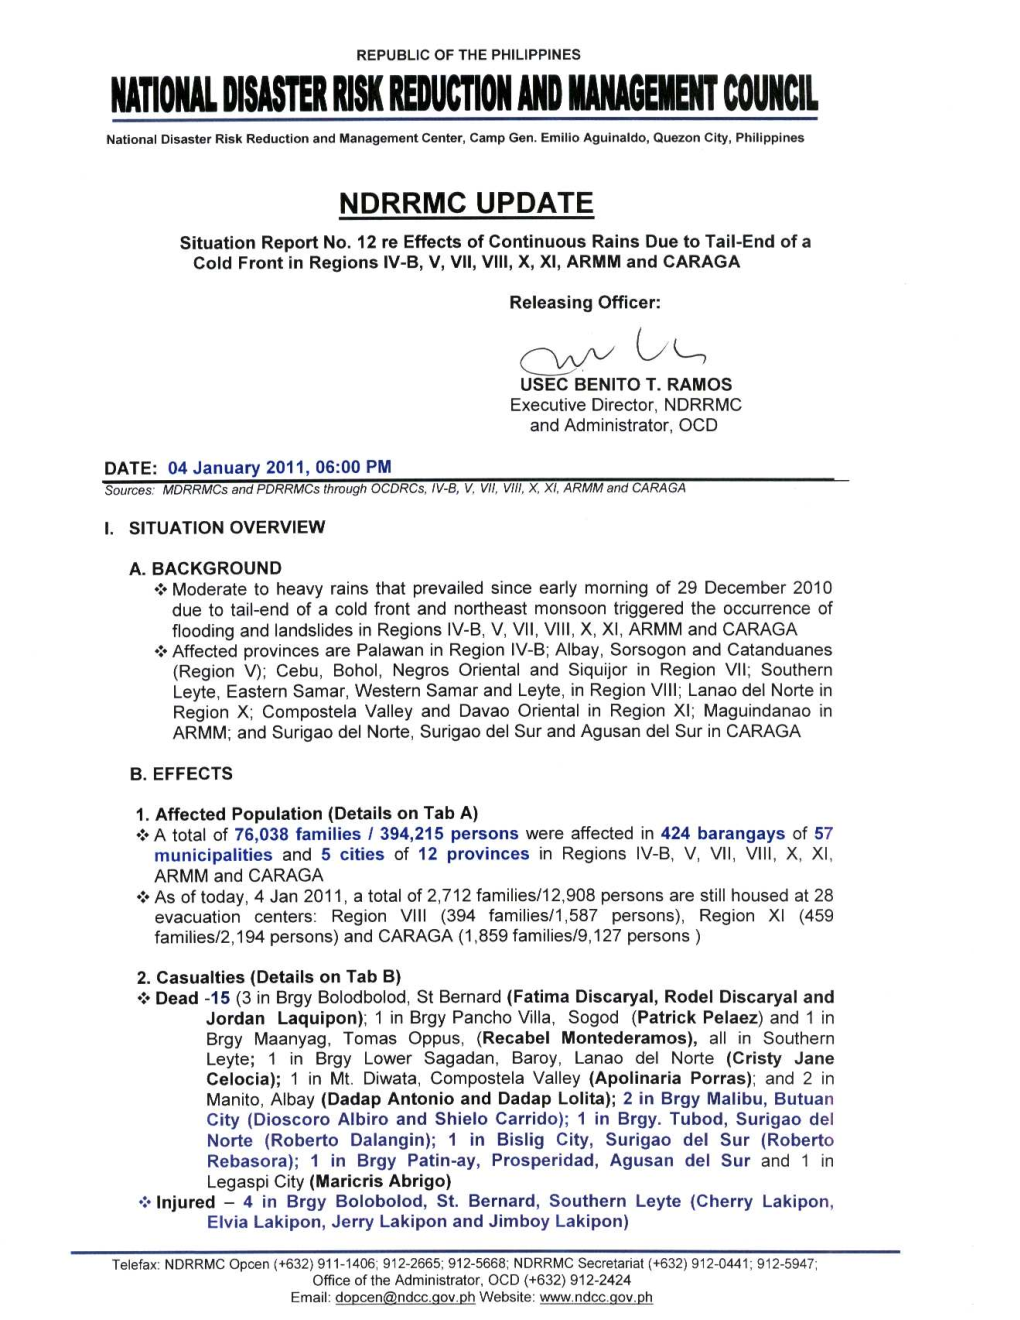 NDRRMC Update Sitrep No. 12 Landslide & Flooding Incidents In